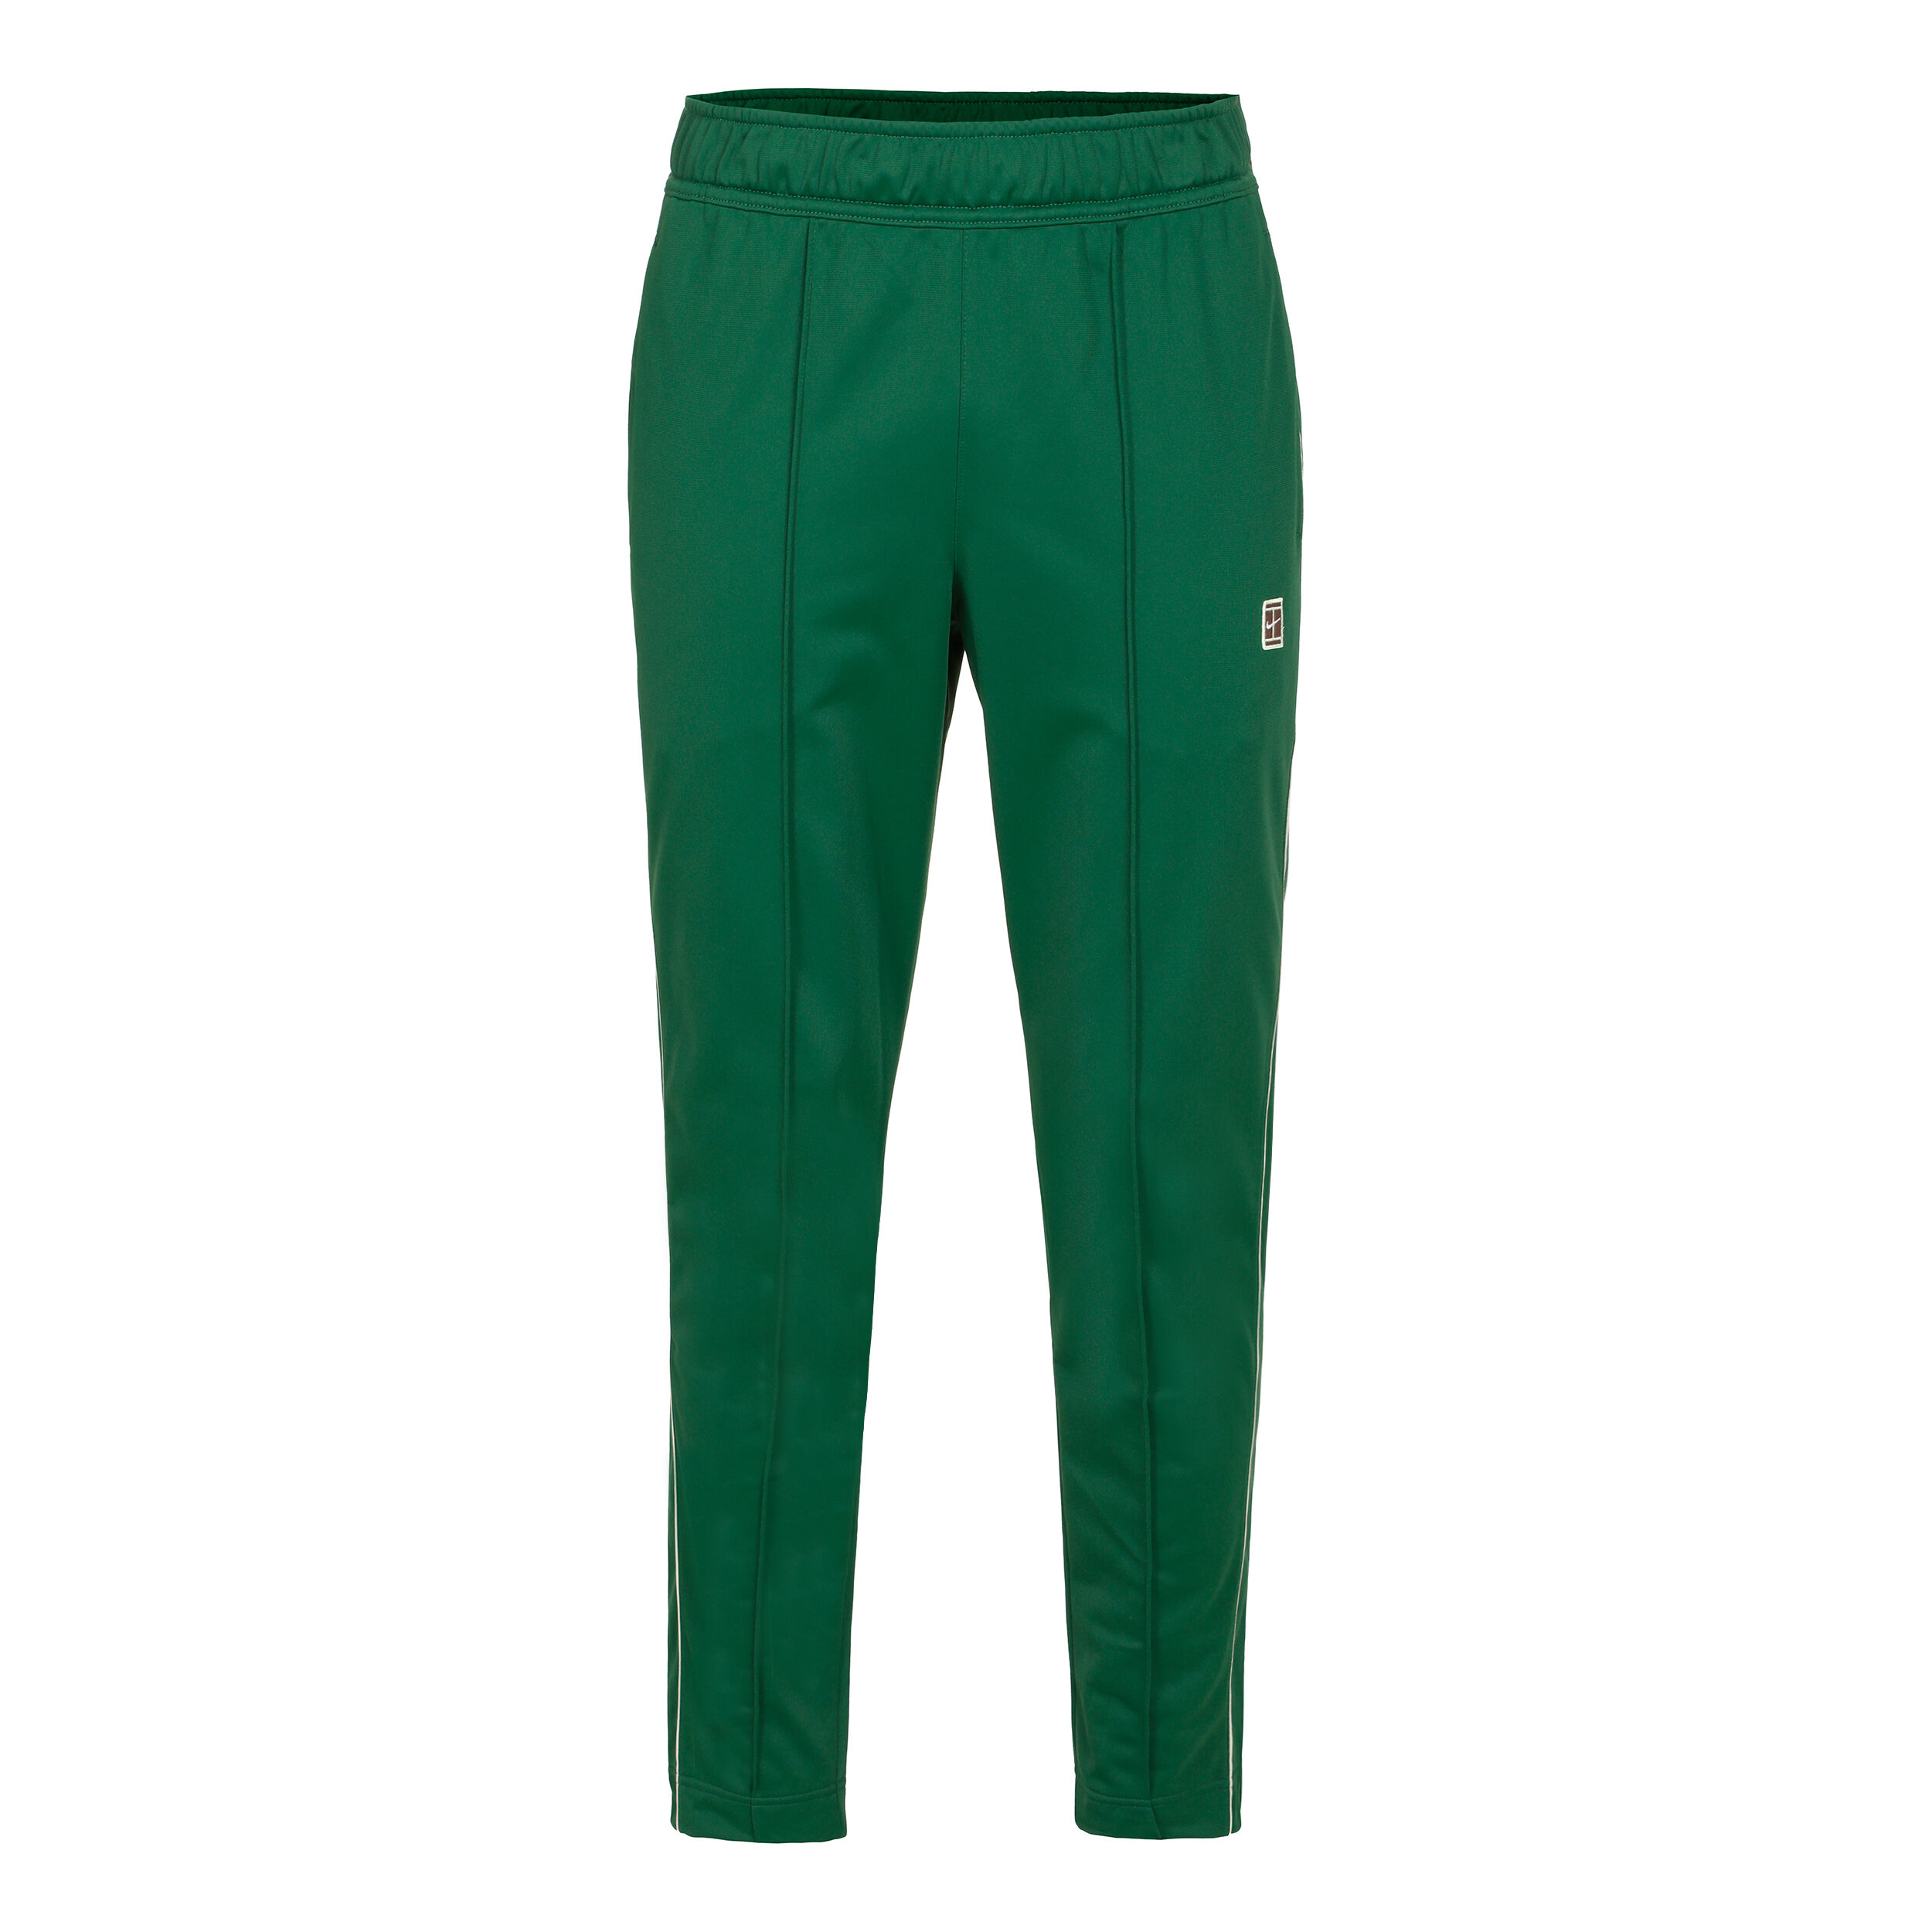 Y2K green Nike track pants | Track pants, Nike track pants, Pants for women